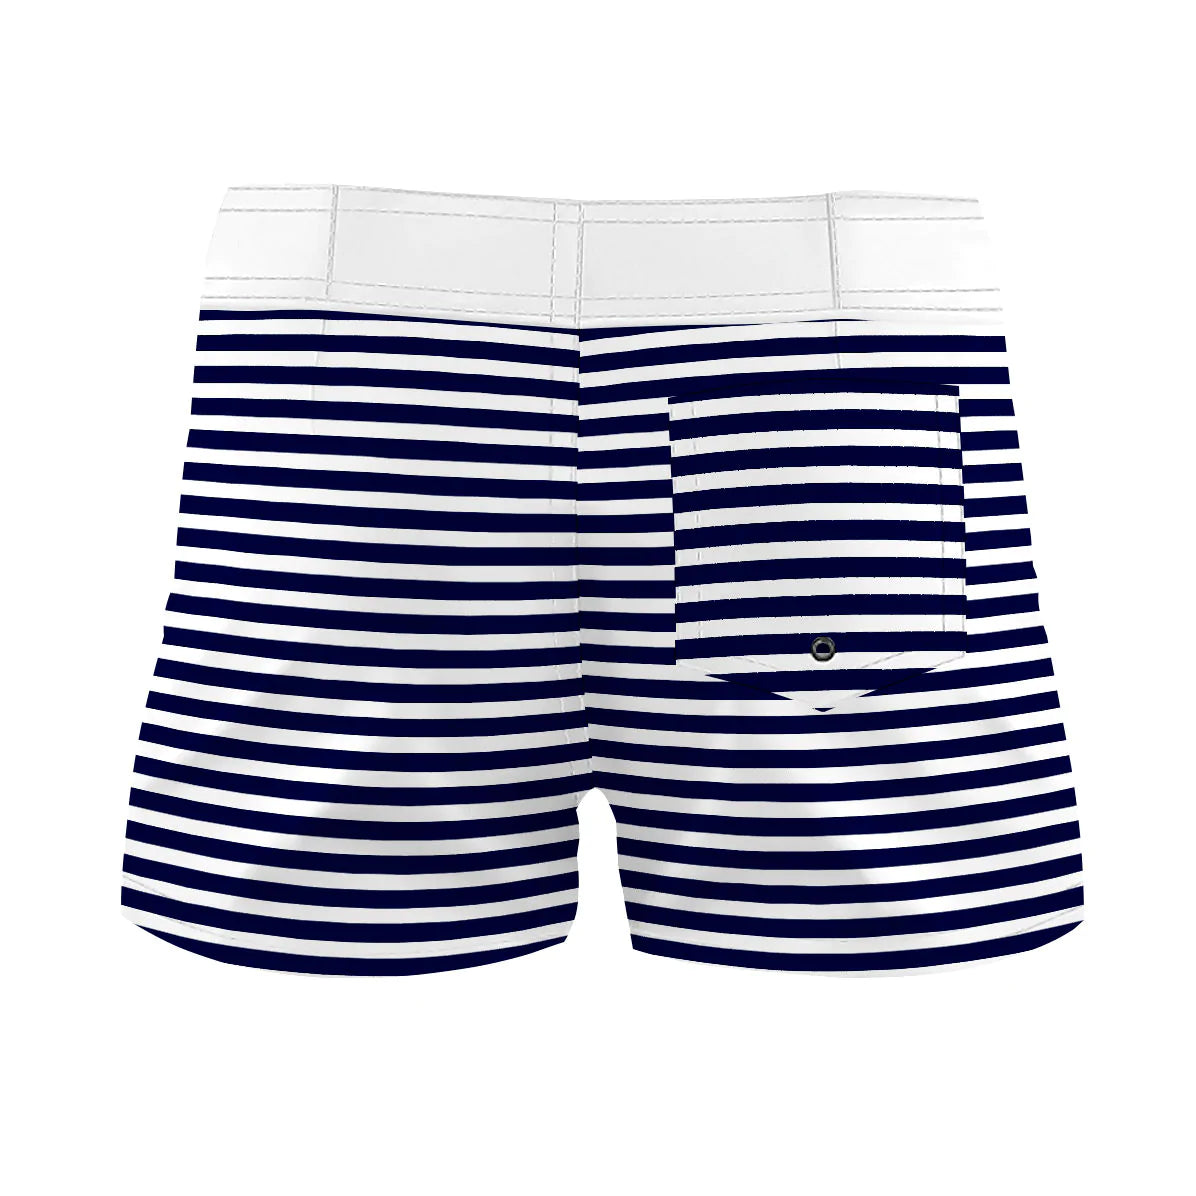 White & Navy Simple Stripes - Women Board Shorts